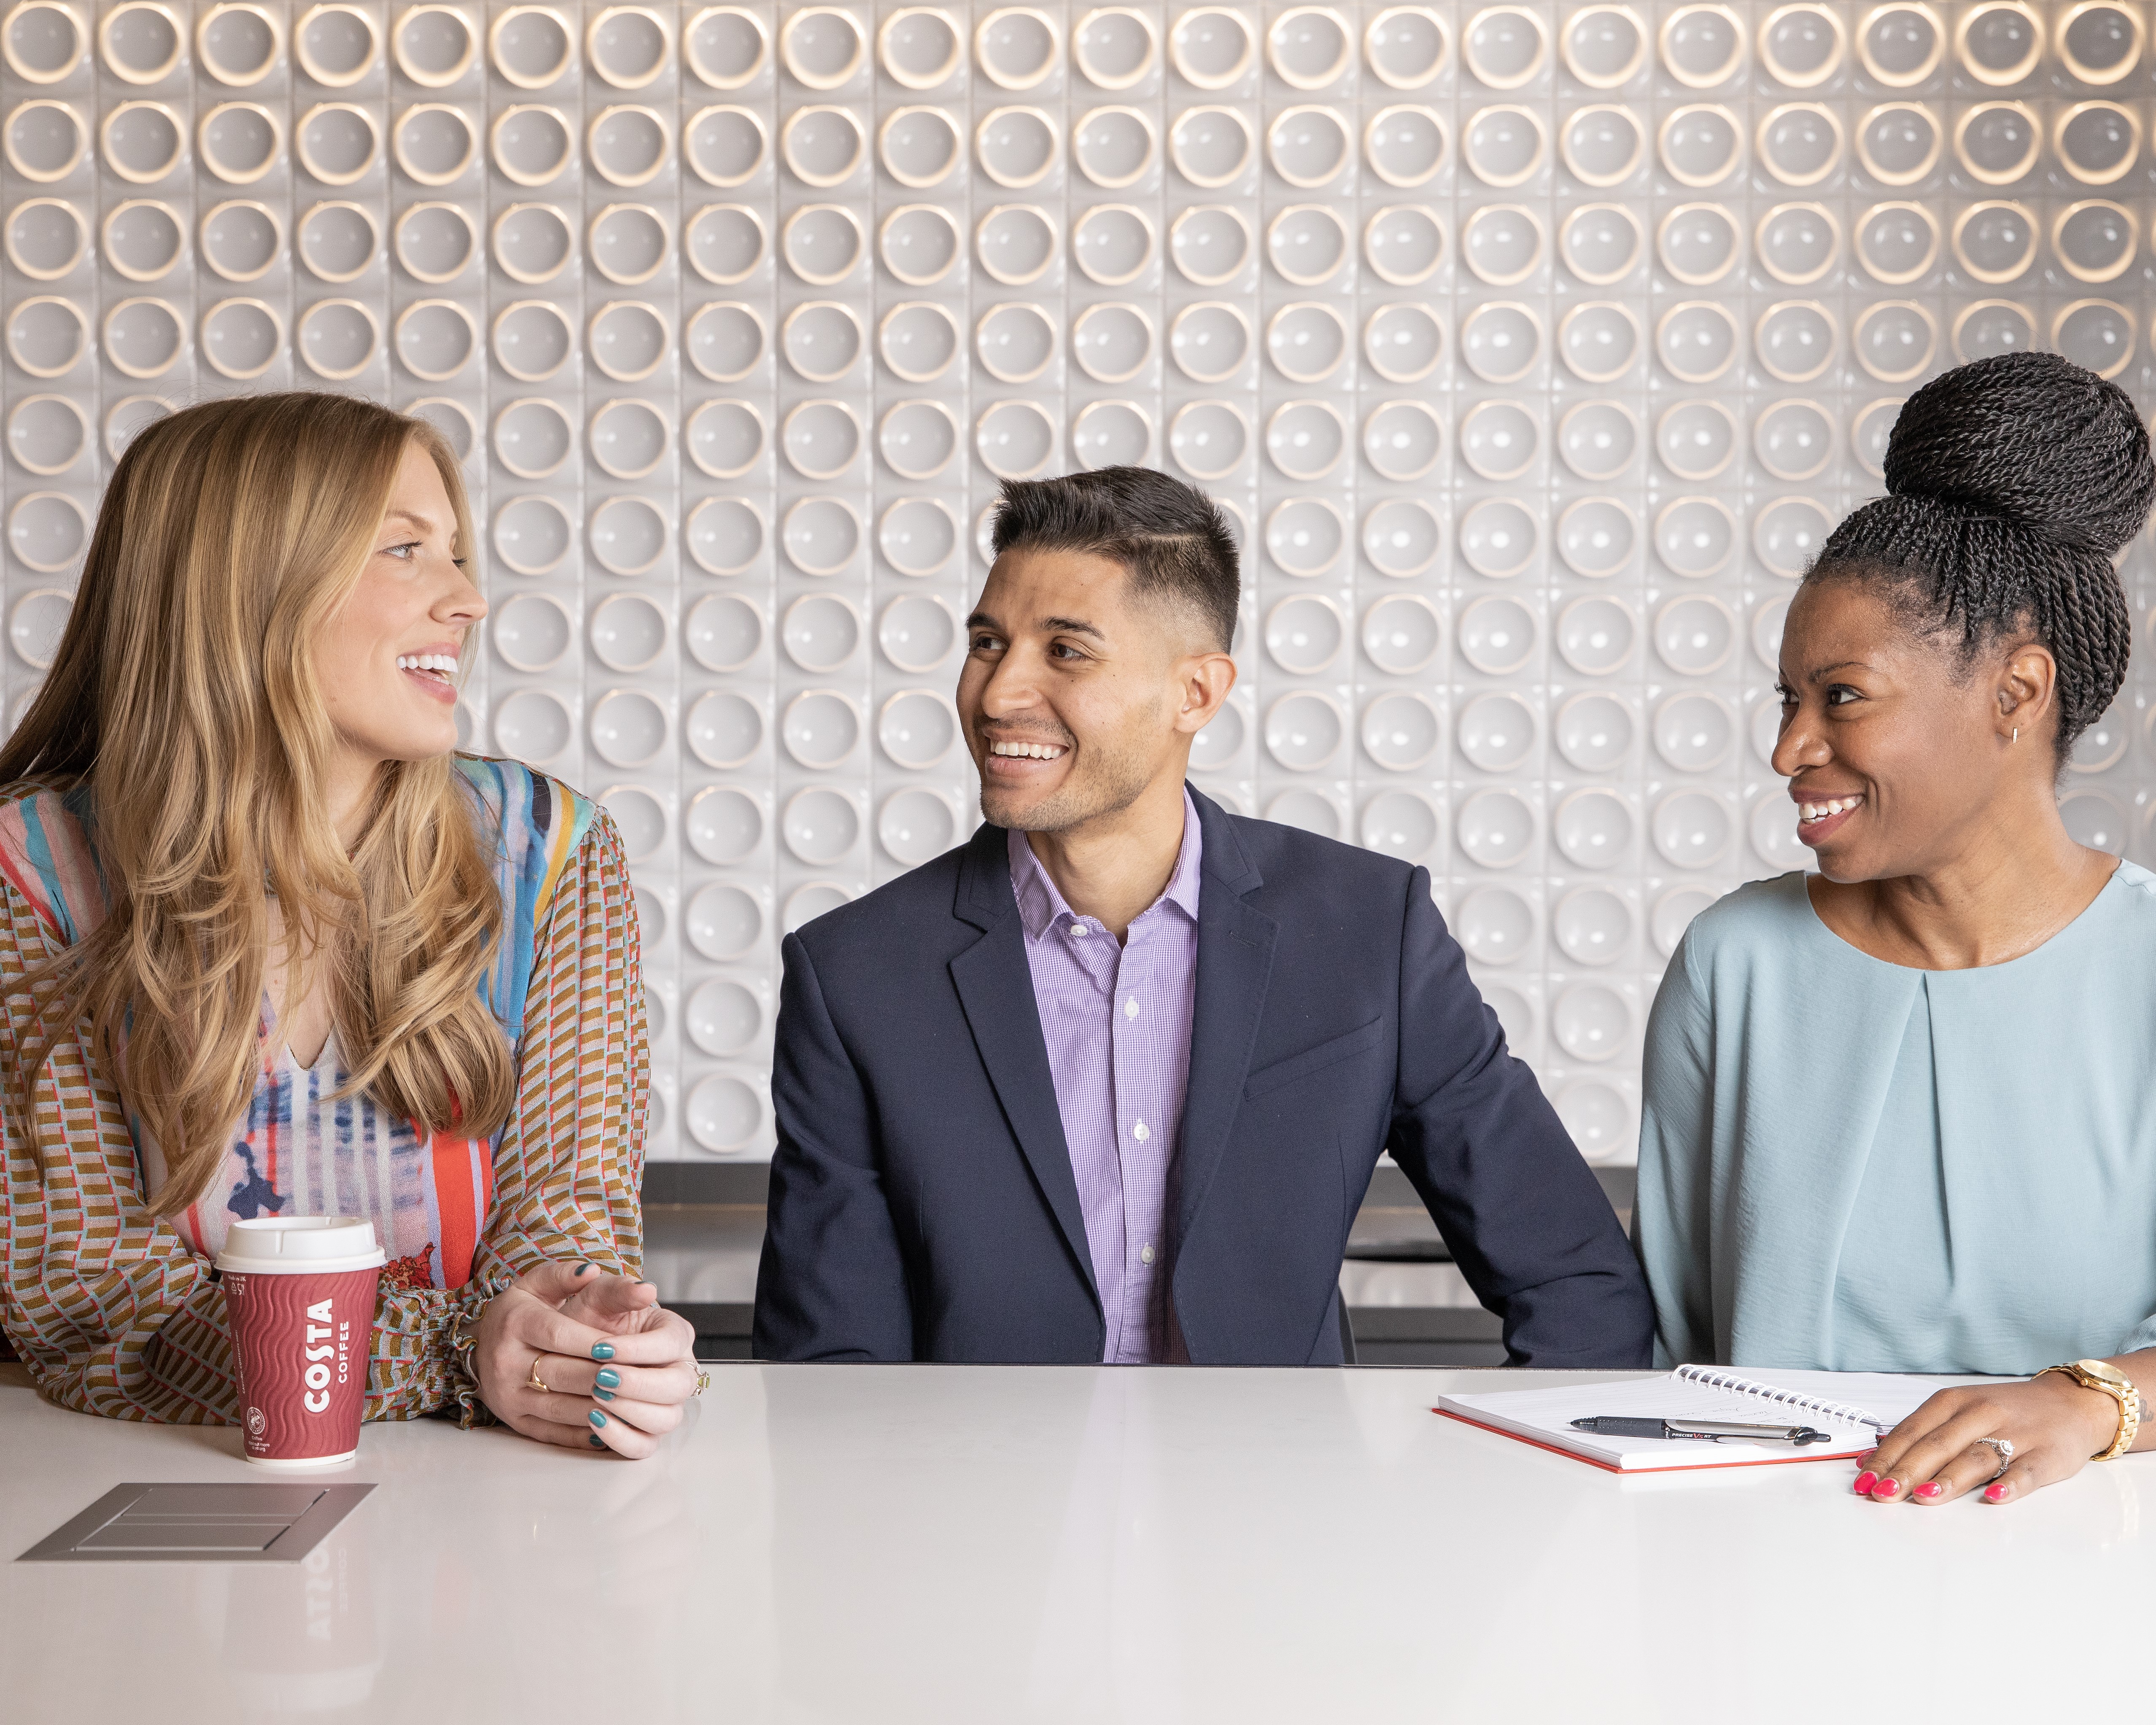 Three employees smile inbetween conversation